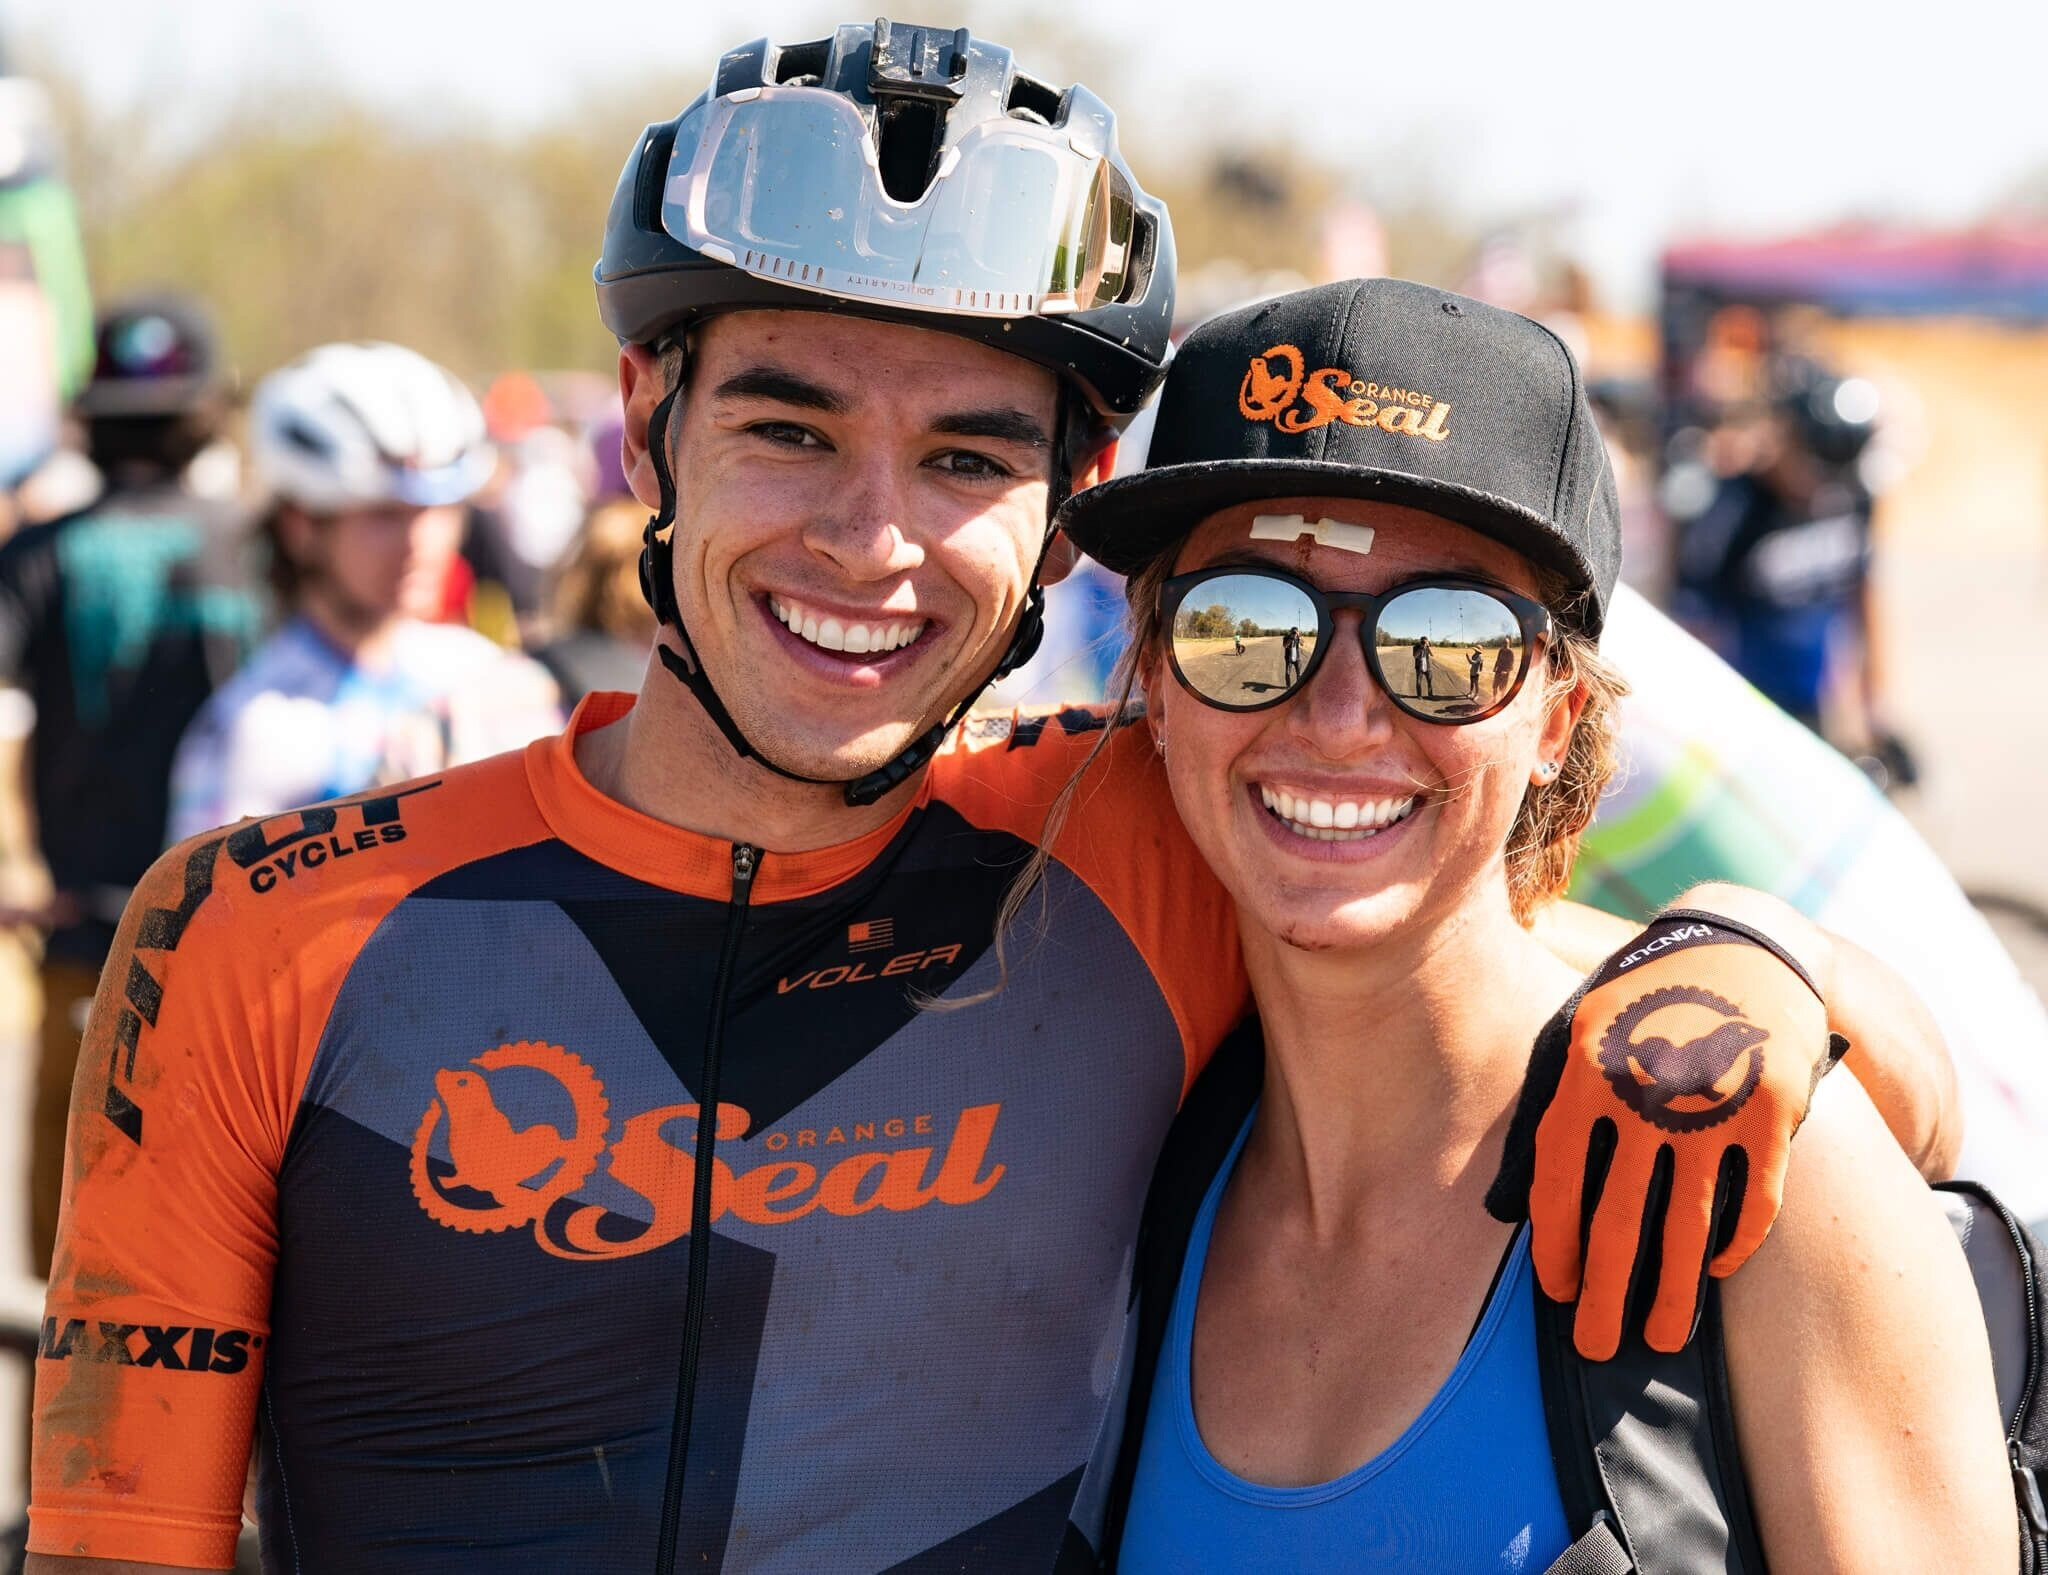 Savilia Blunk and Cole Paton at OZ Trails US Cup Mountain bike race.jpg